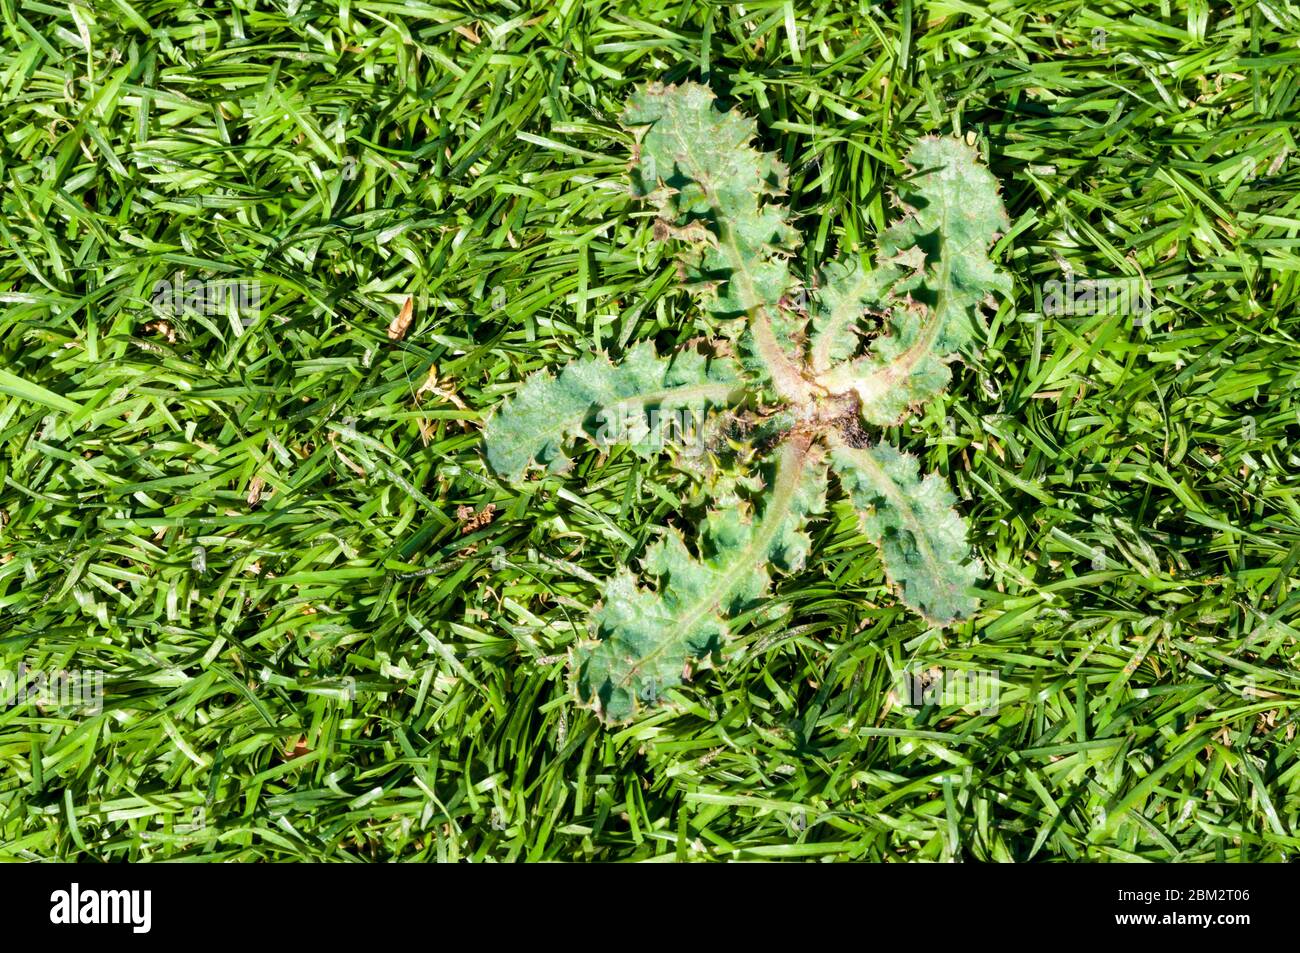 Un giardino o erbacce erbose, Dandelion Taraxacum officinale, che cresce in astroturf erba artificiale. Foto Stock